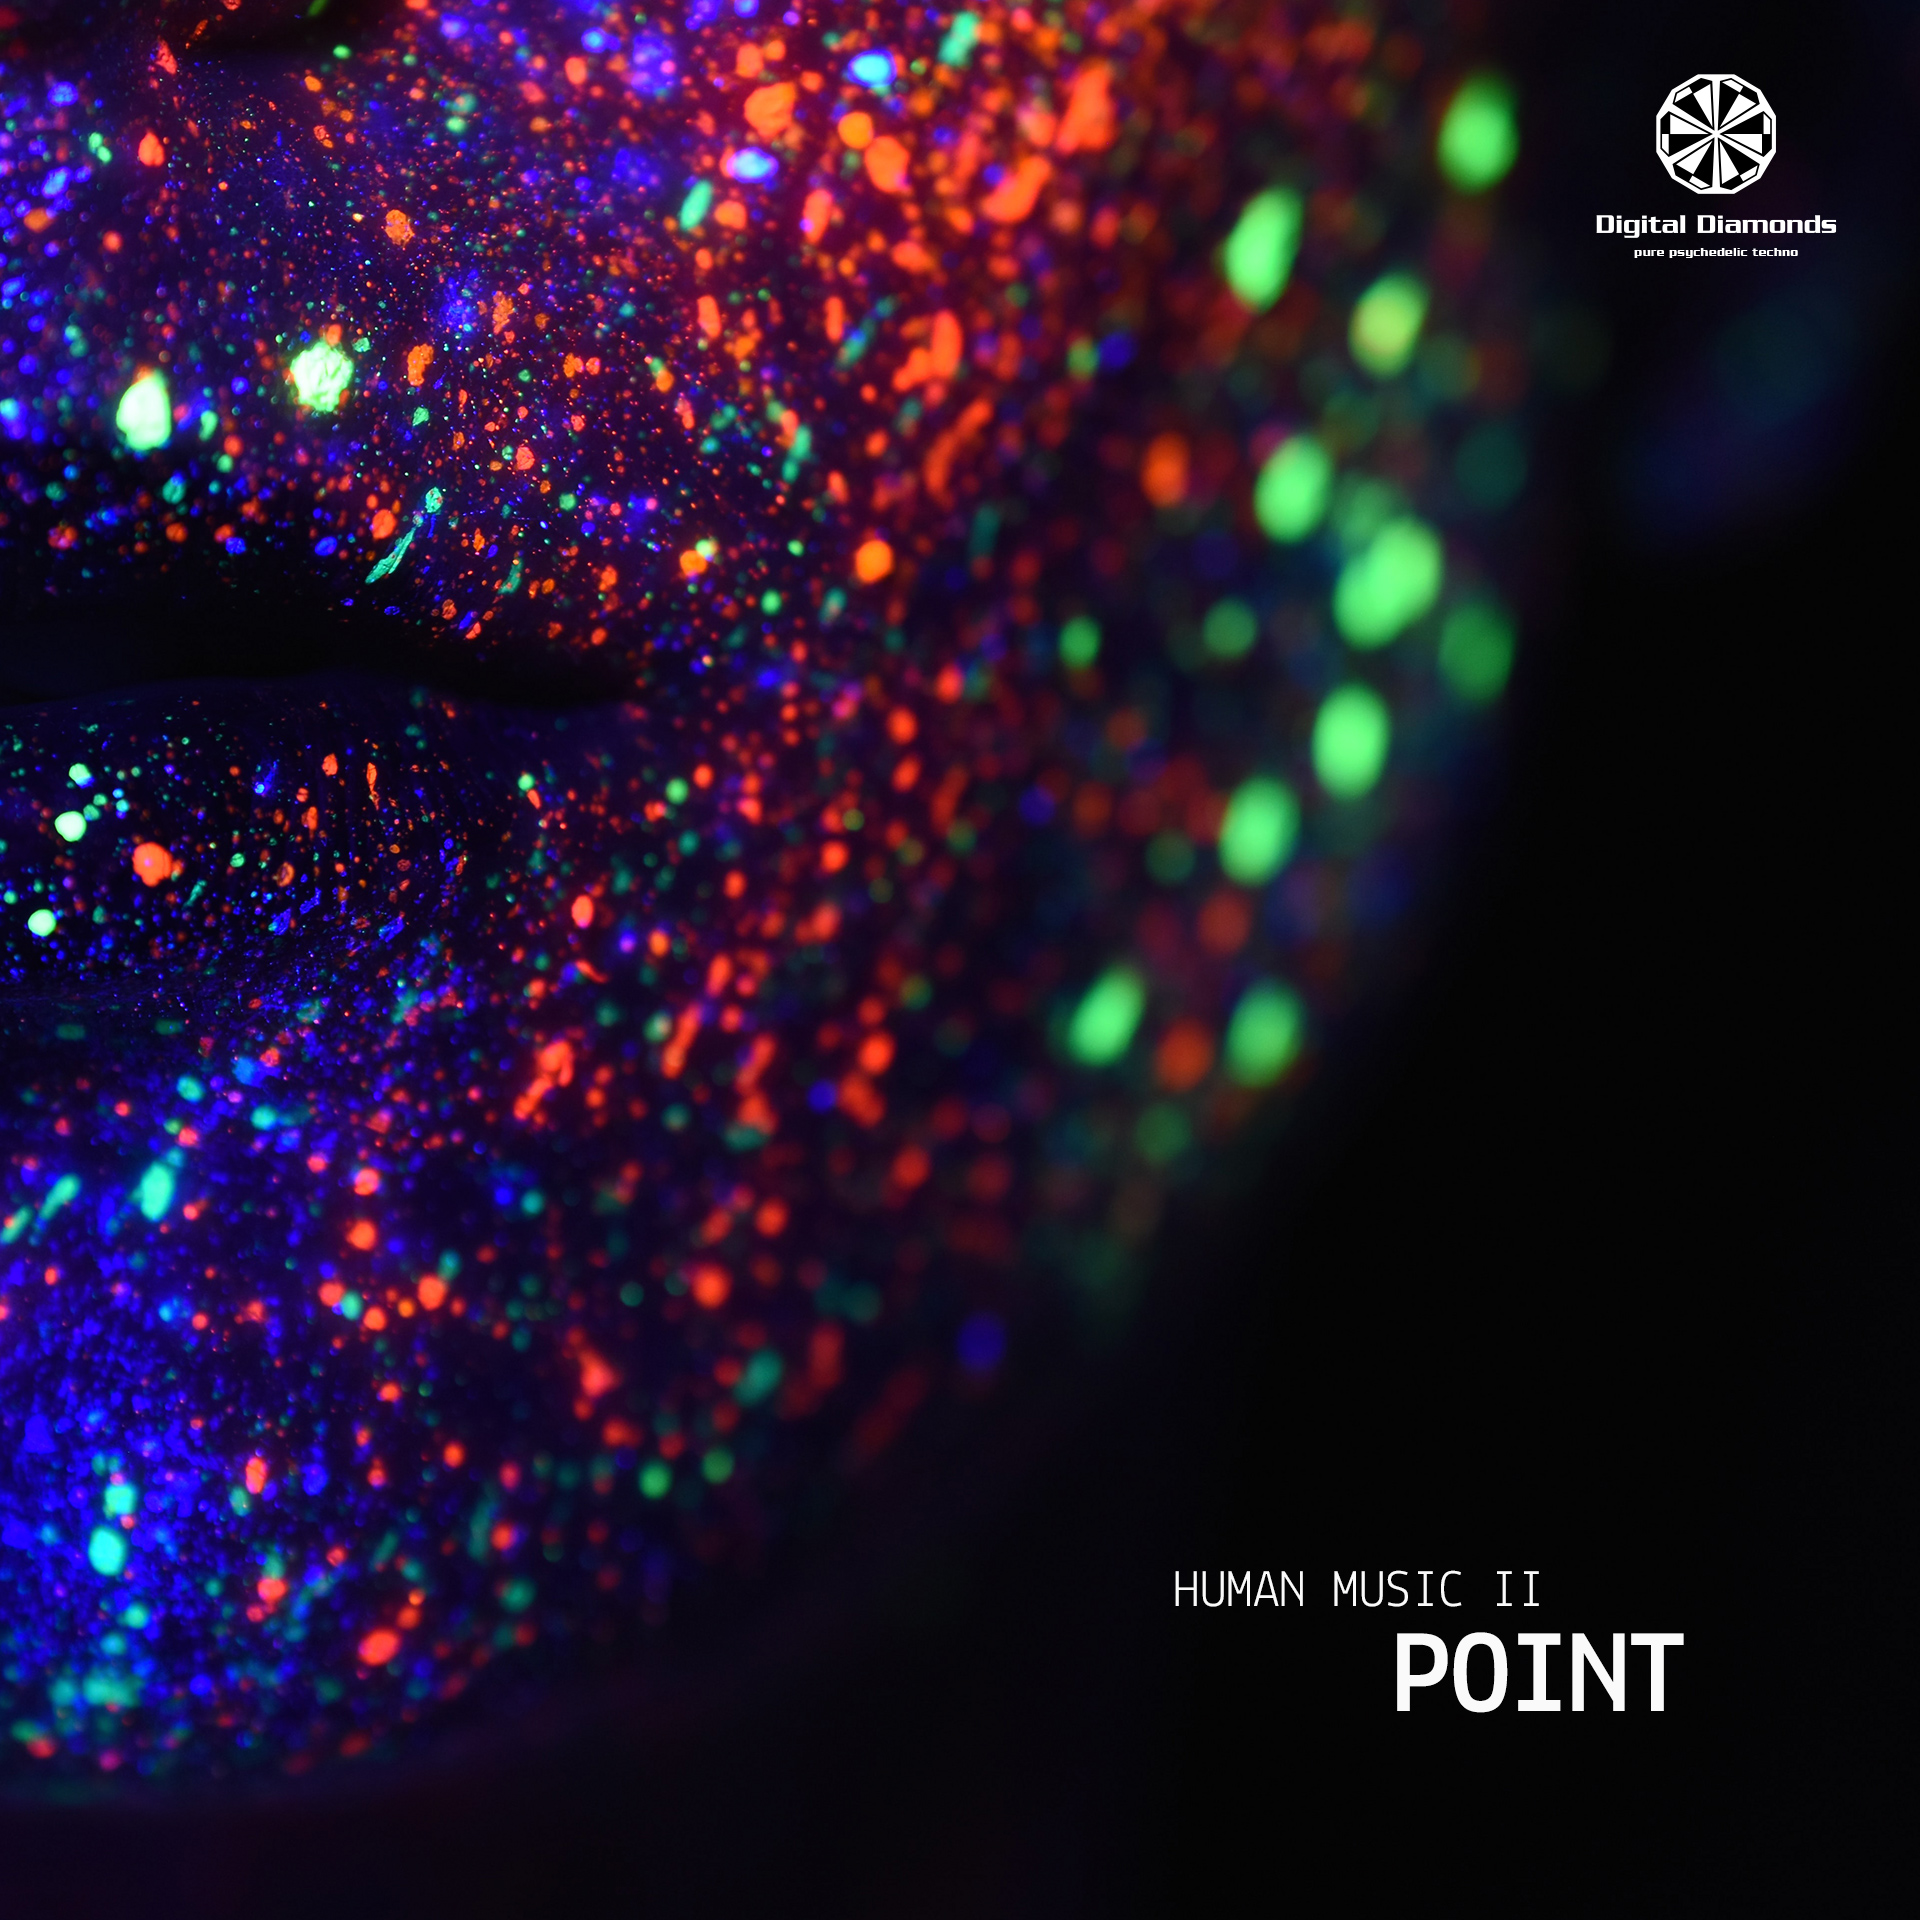 Point – Human Music II